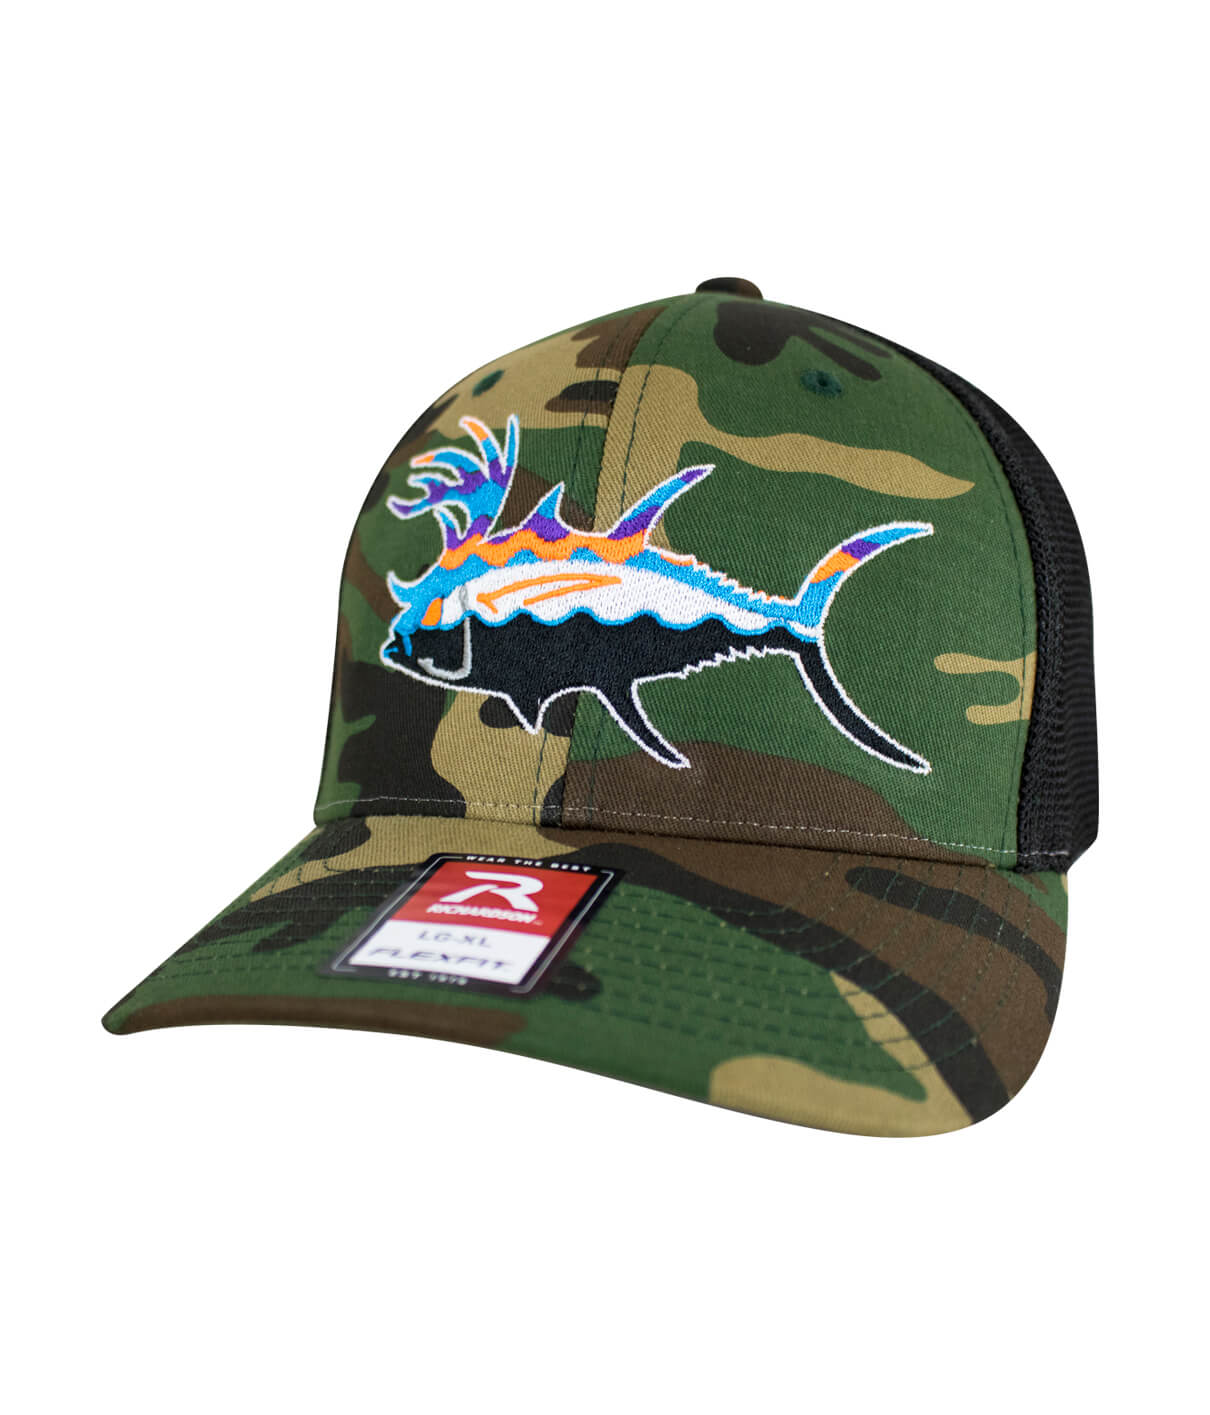 Buck-Eye Meshback Flexfit Baseball Caps